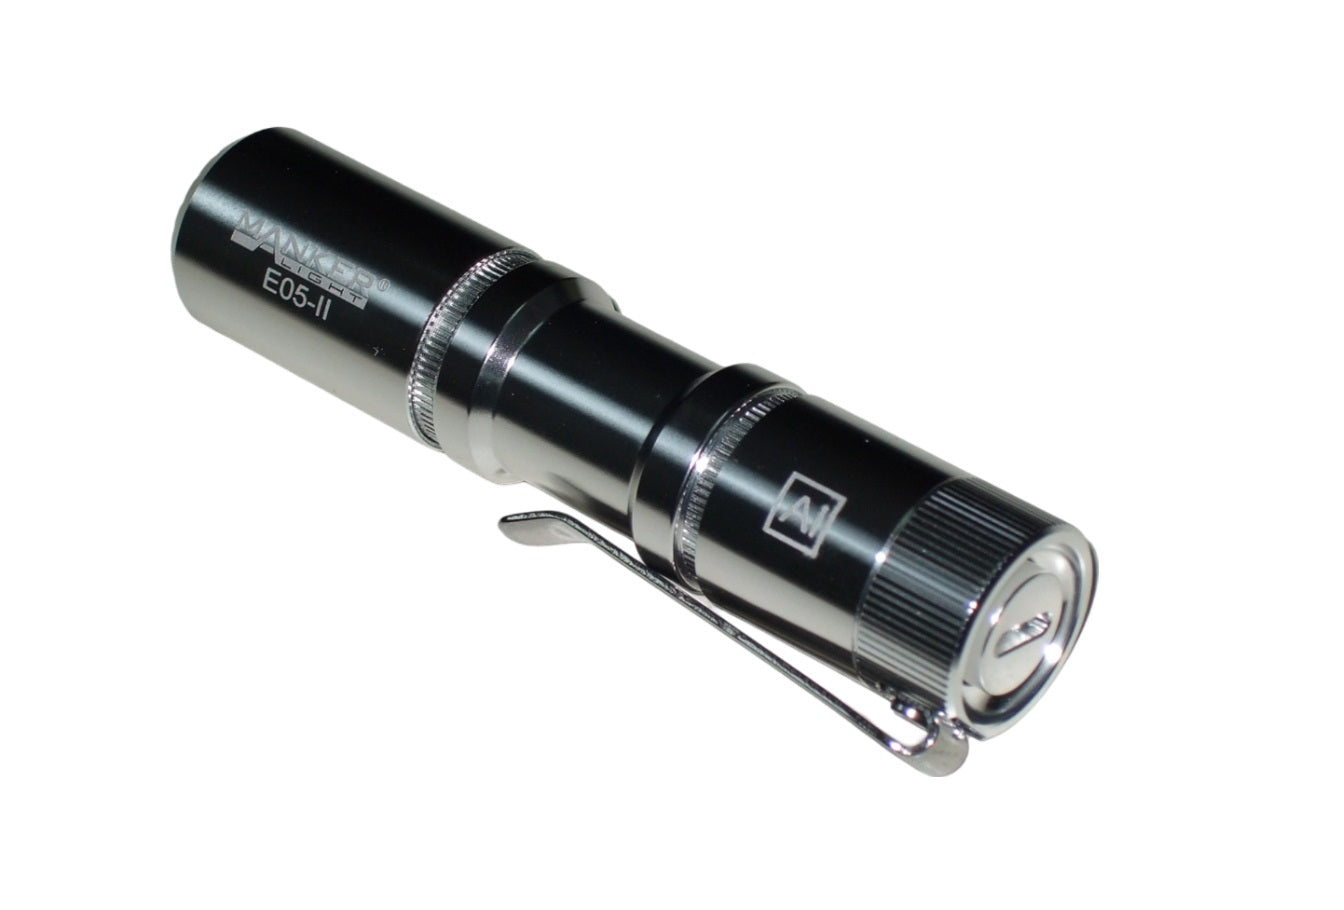 New Manker E05 II AL Silver (CW) 1300 Lumens LED Flashlight Torch (NO Battery)